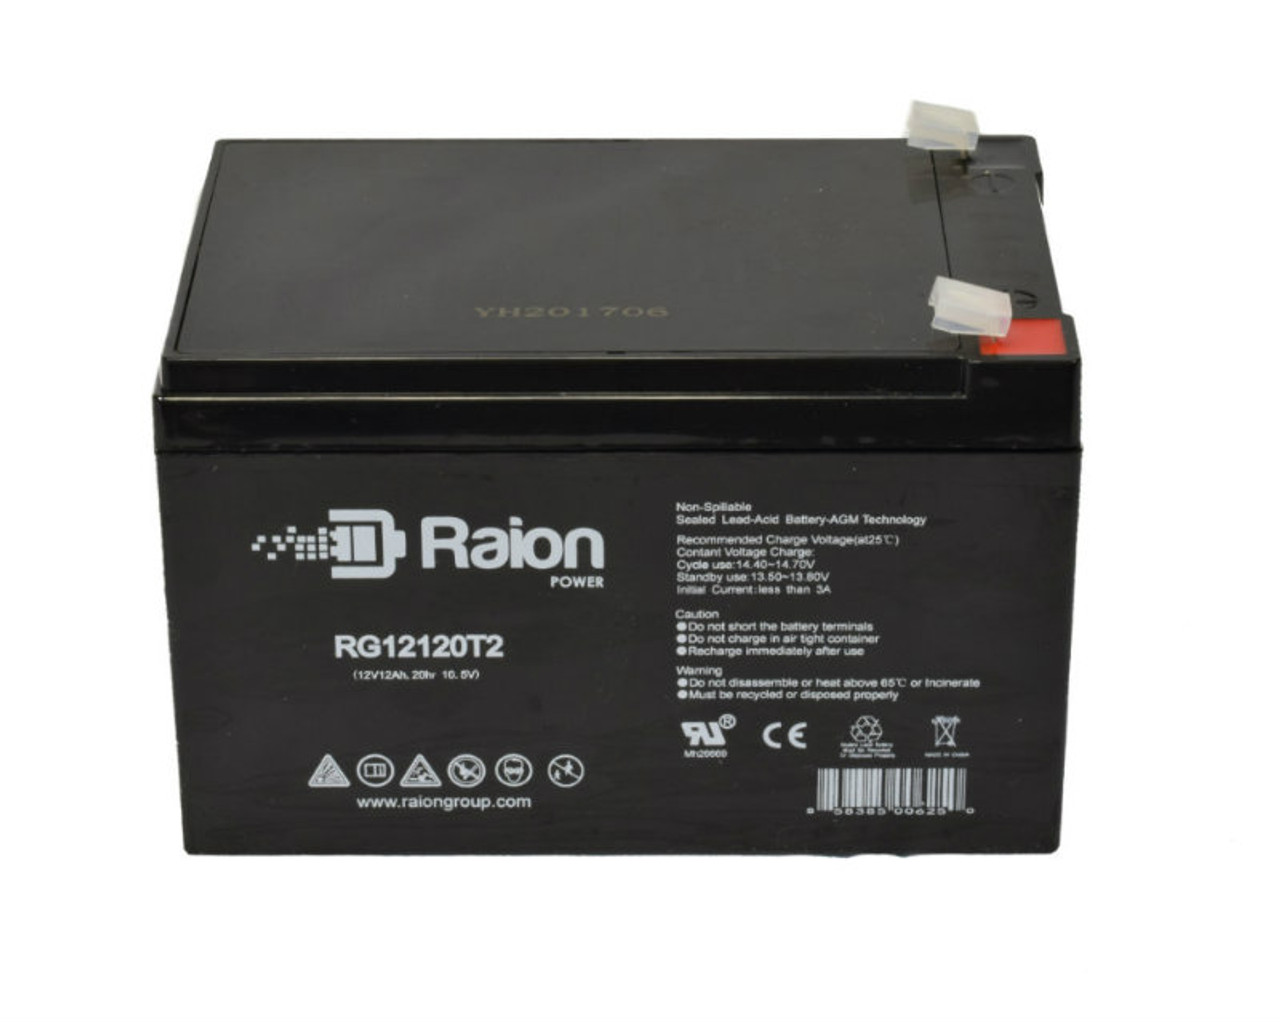 Raion Power RG12120T2 SLA Battery for Chiway SJ12V12Ah